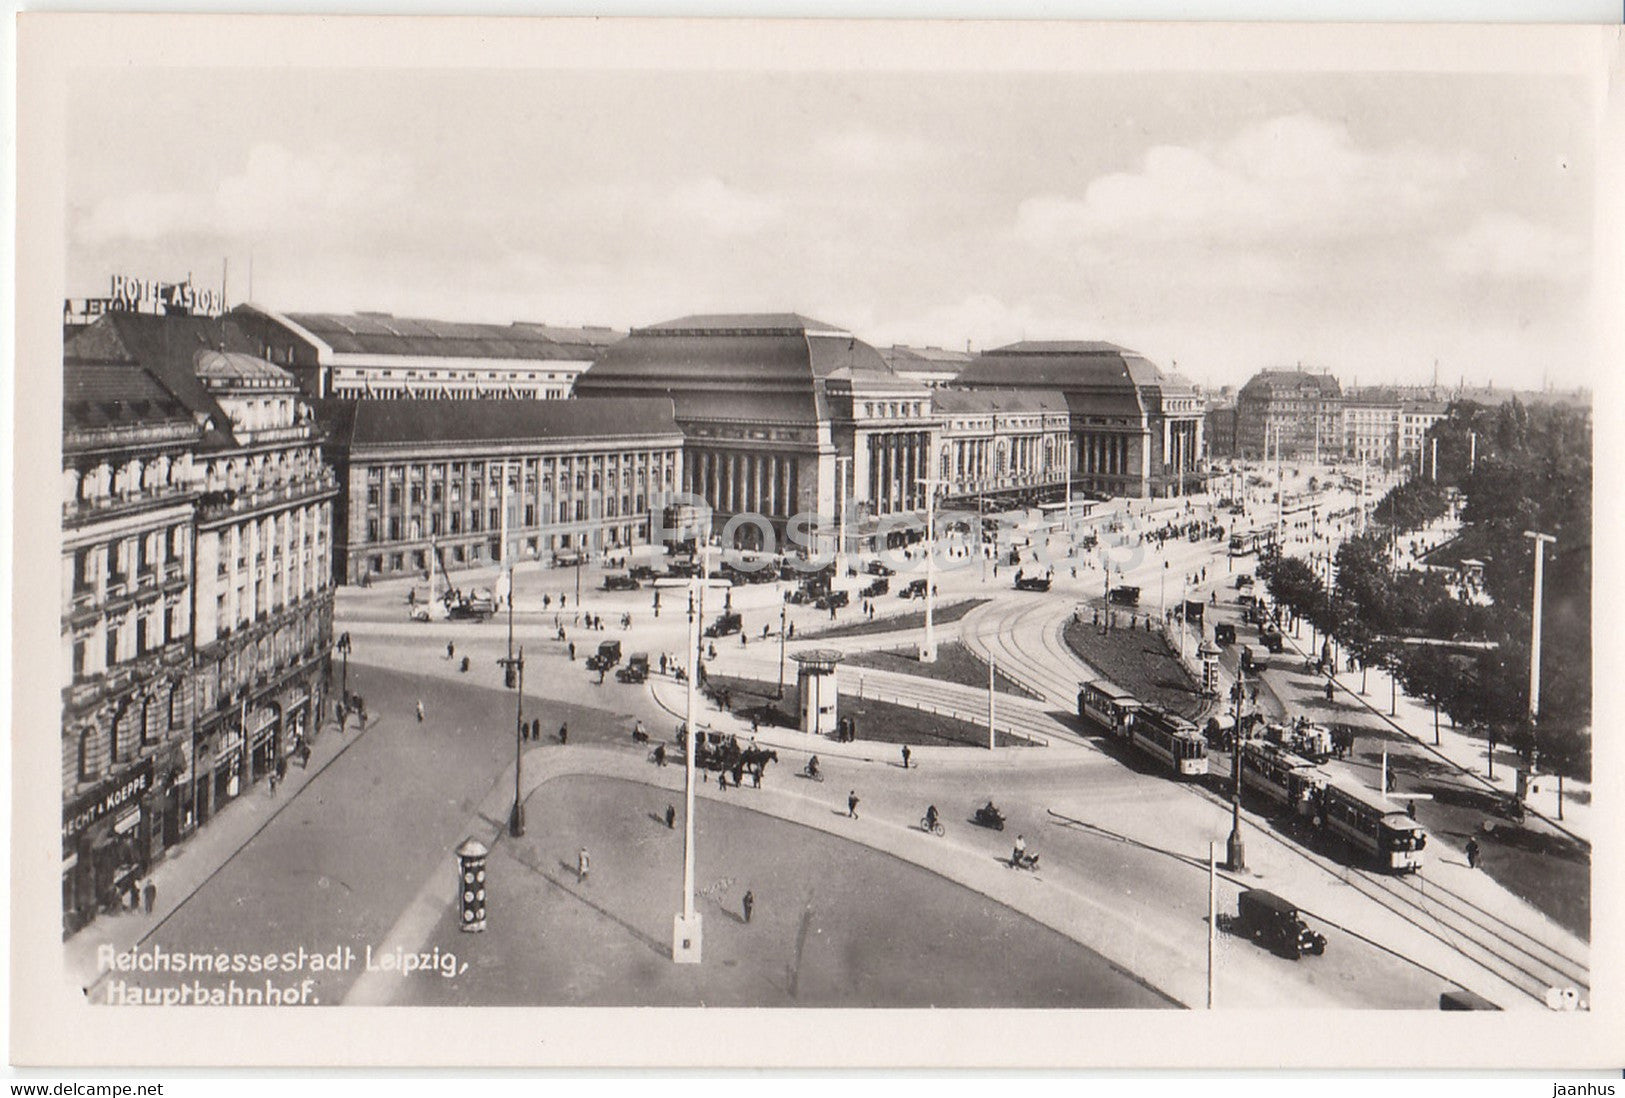 Reichsmessestadt Leipzig - Hauptbahnhof - railway station - tram - old postcard - Germany - unused - JH Postcards